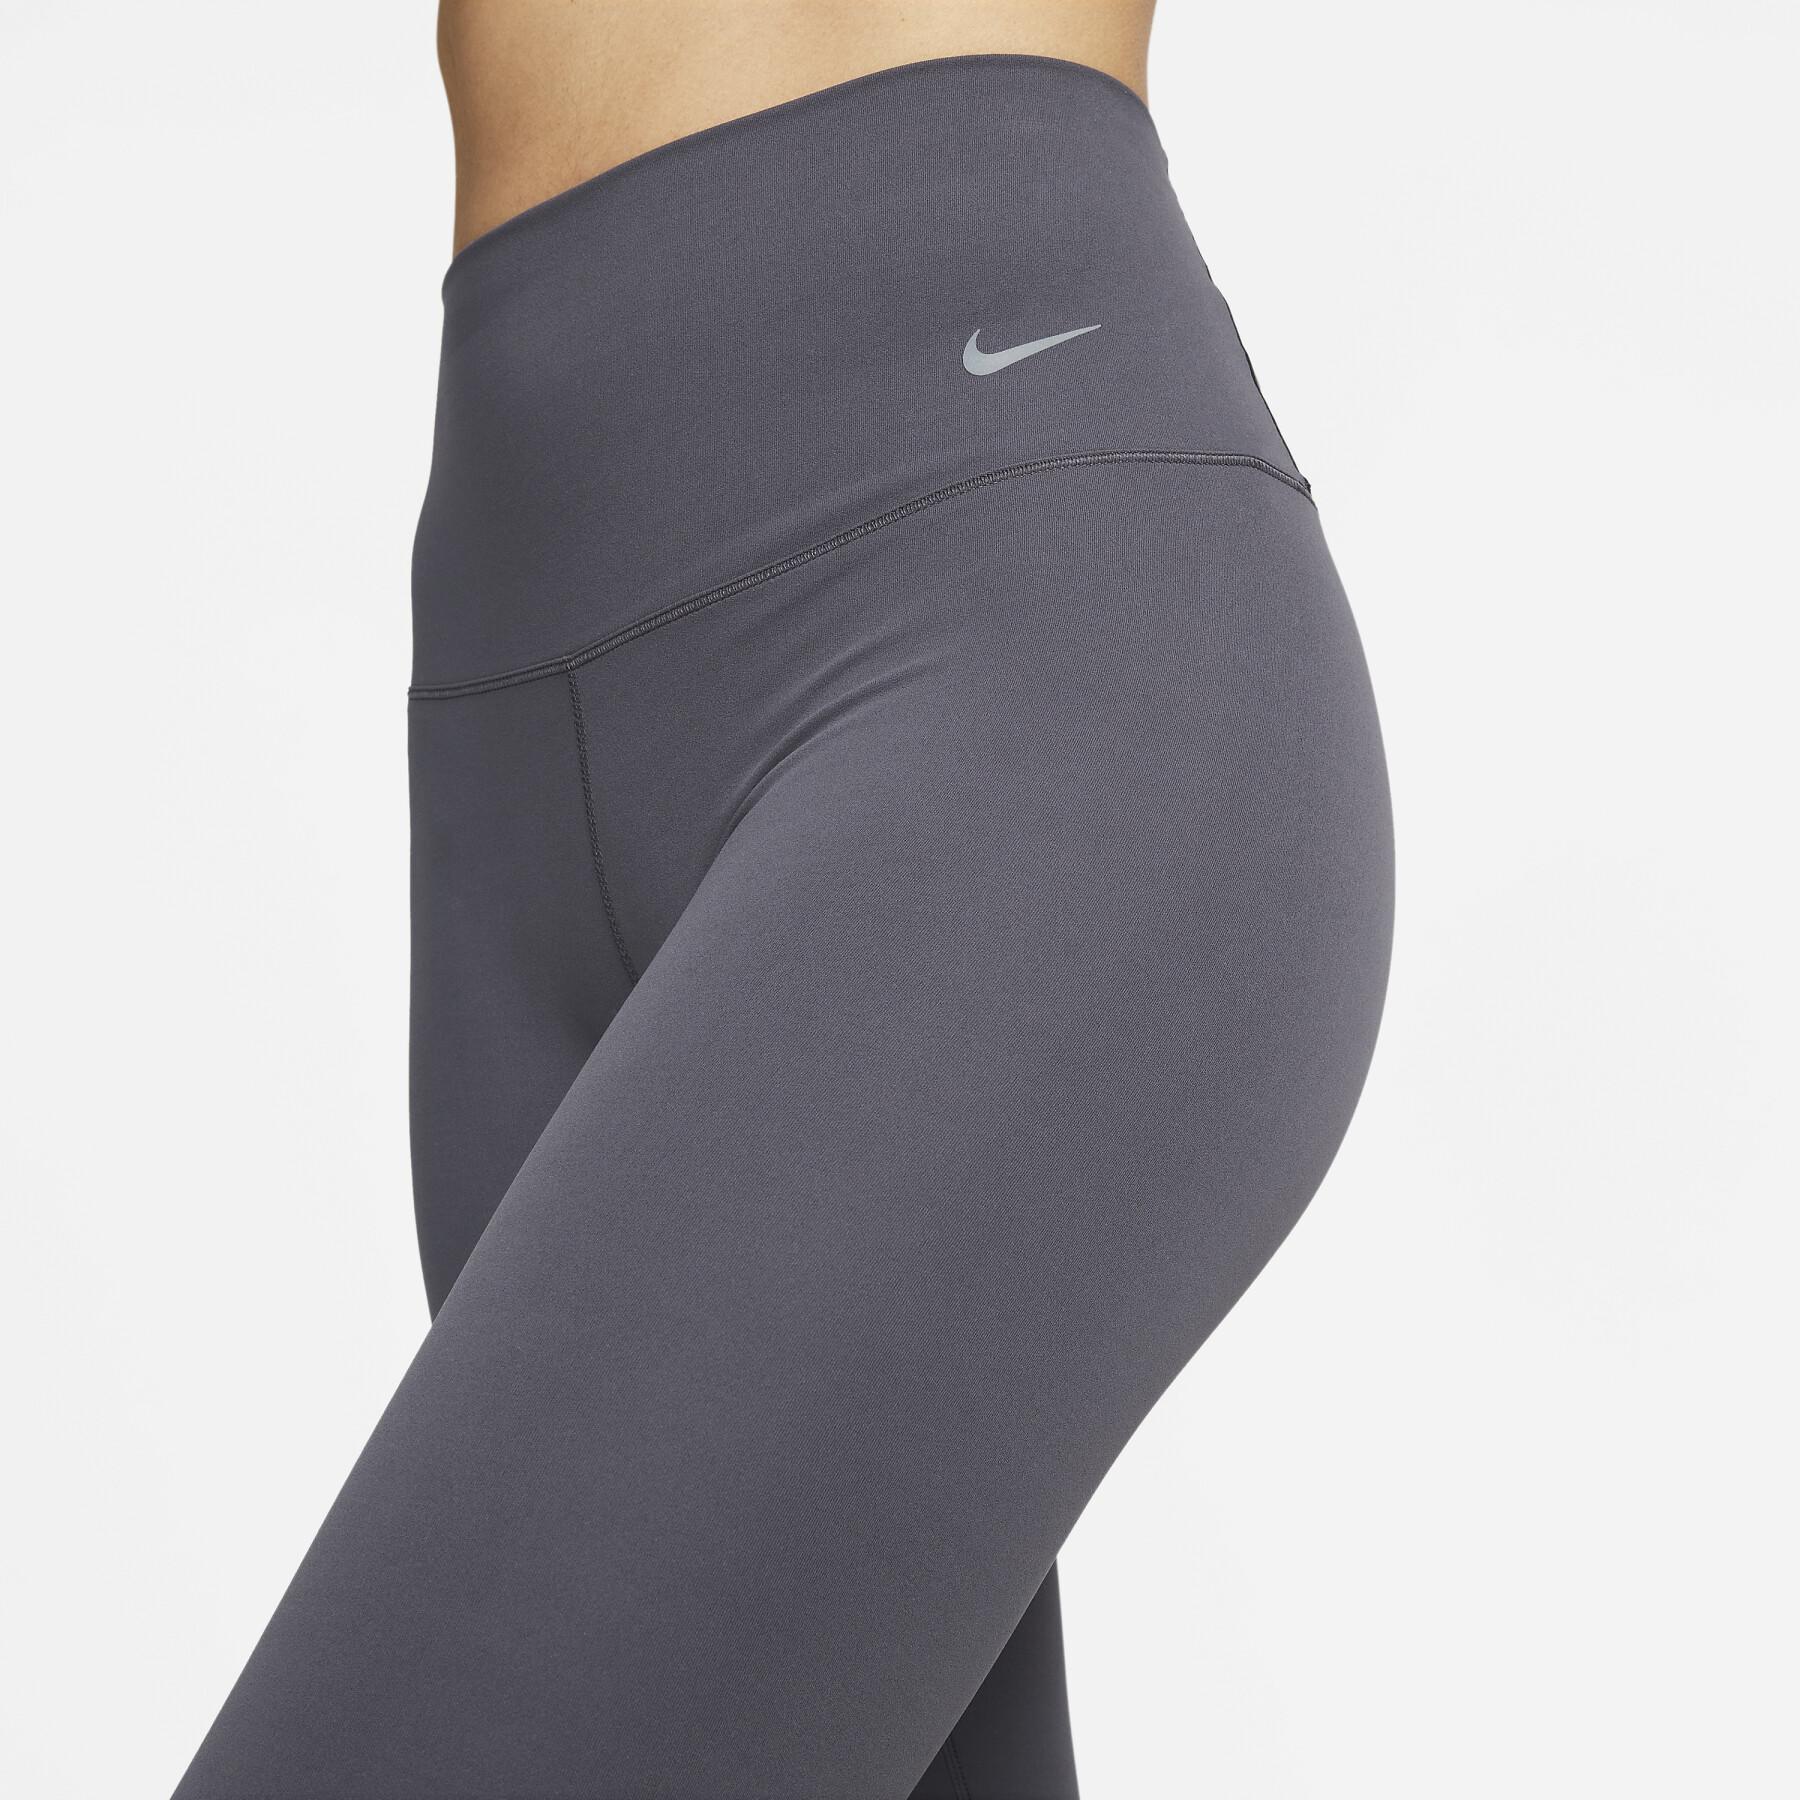 Legging 7/8 kobieta Nike Dri-Fit Zenvy HR